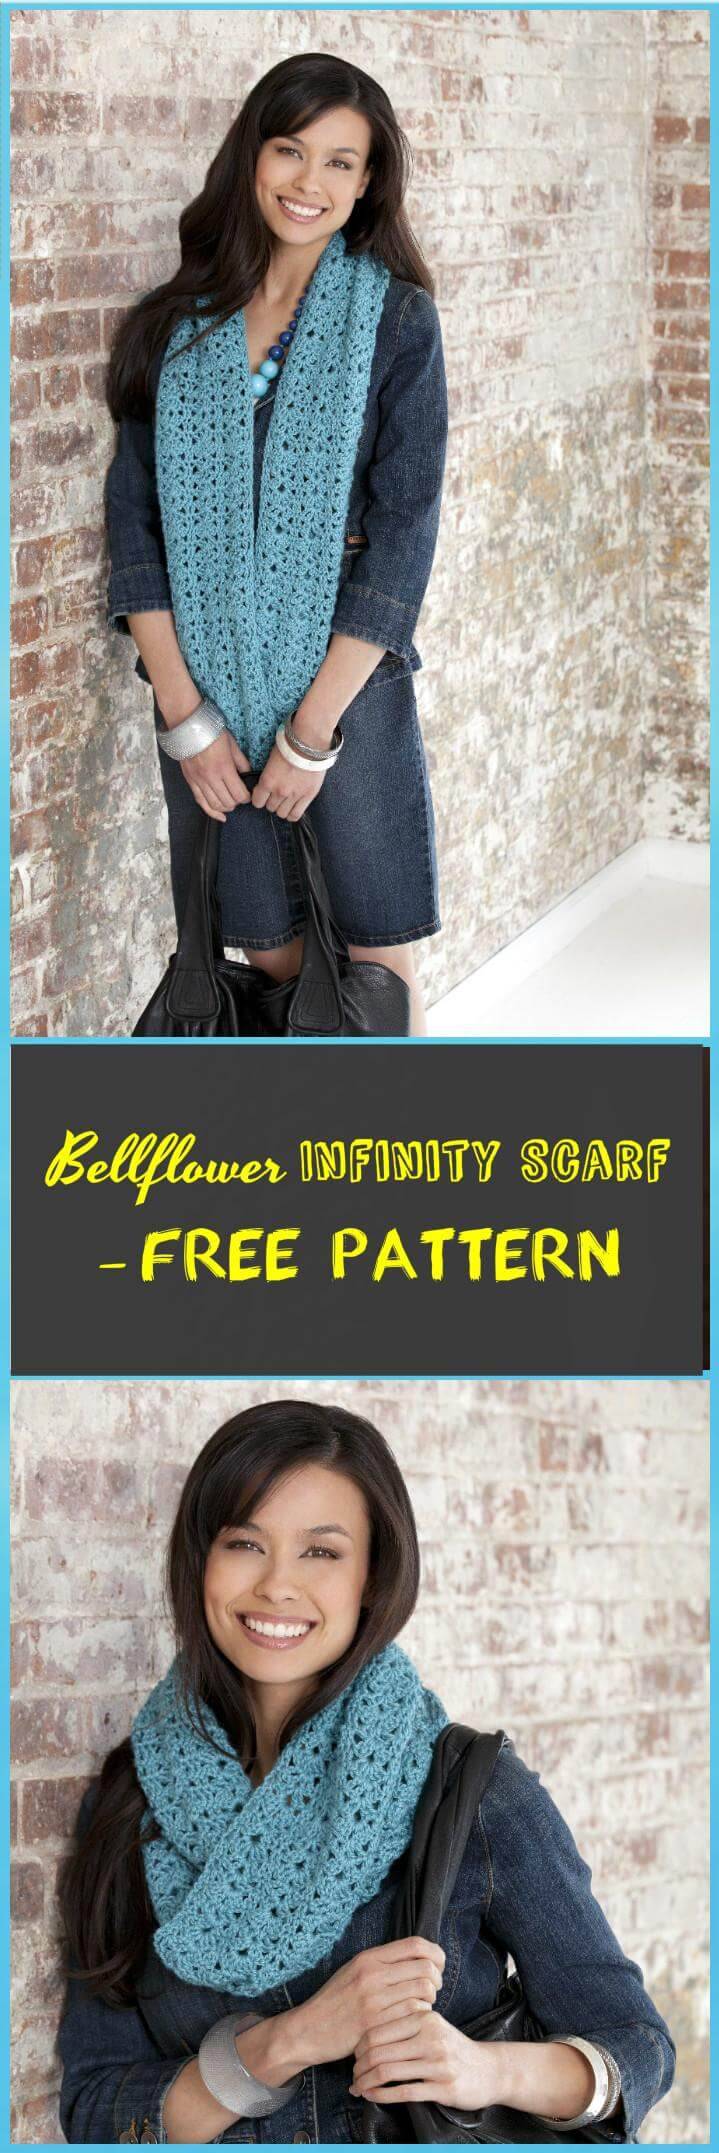 easy bellflower infinity scarf free pattern